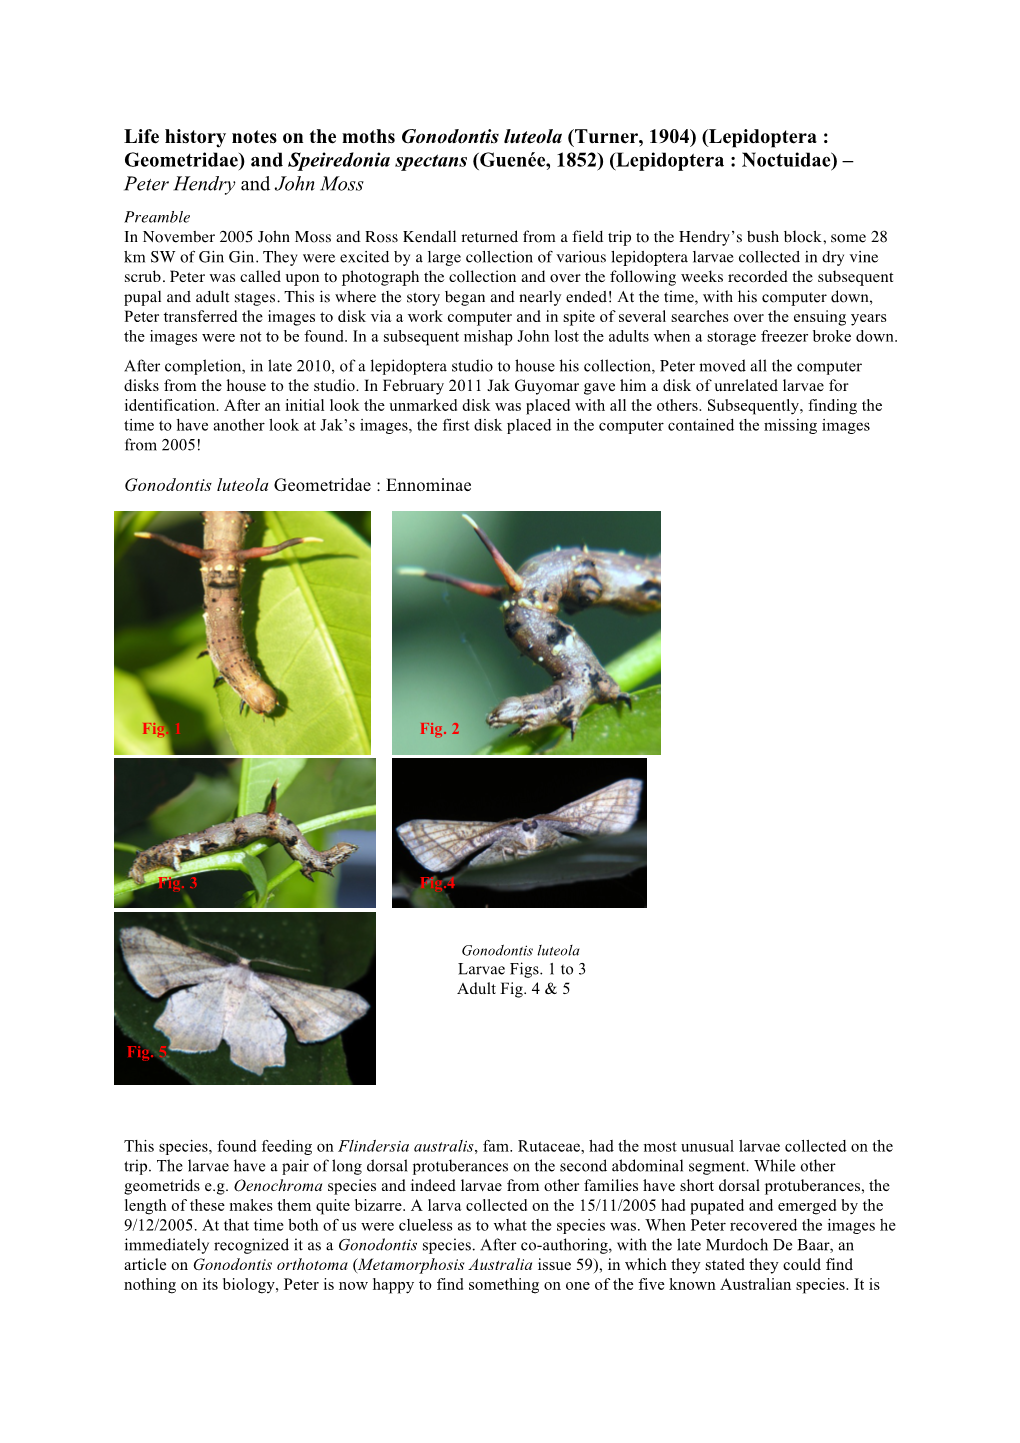 Life History Notes on the Moths Gonodontis Luteola